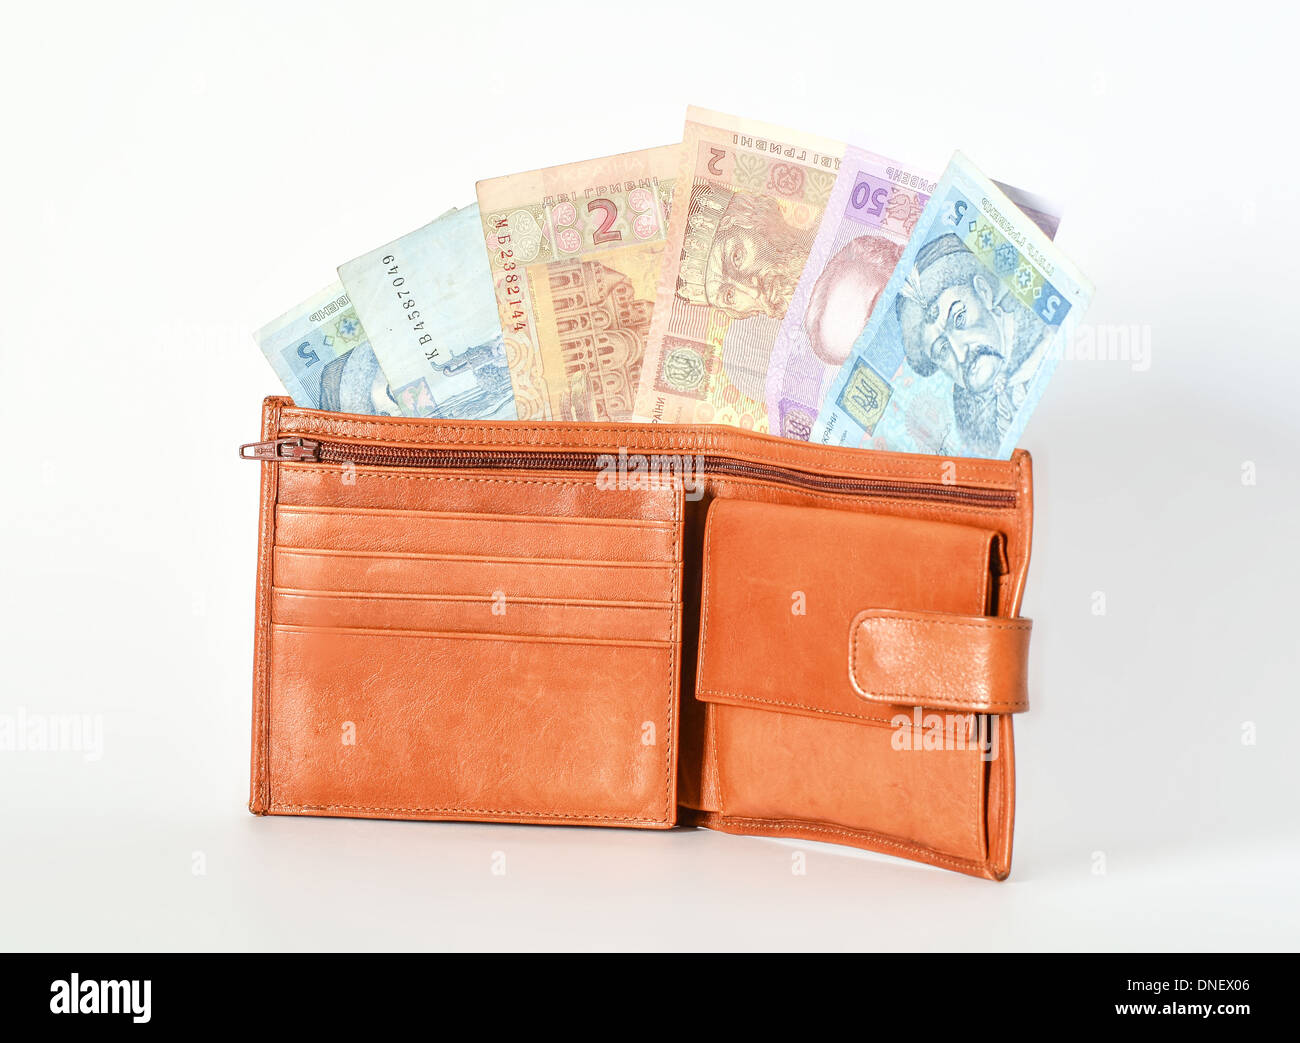 men's wallet purse Stock Photo